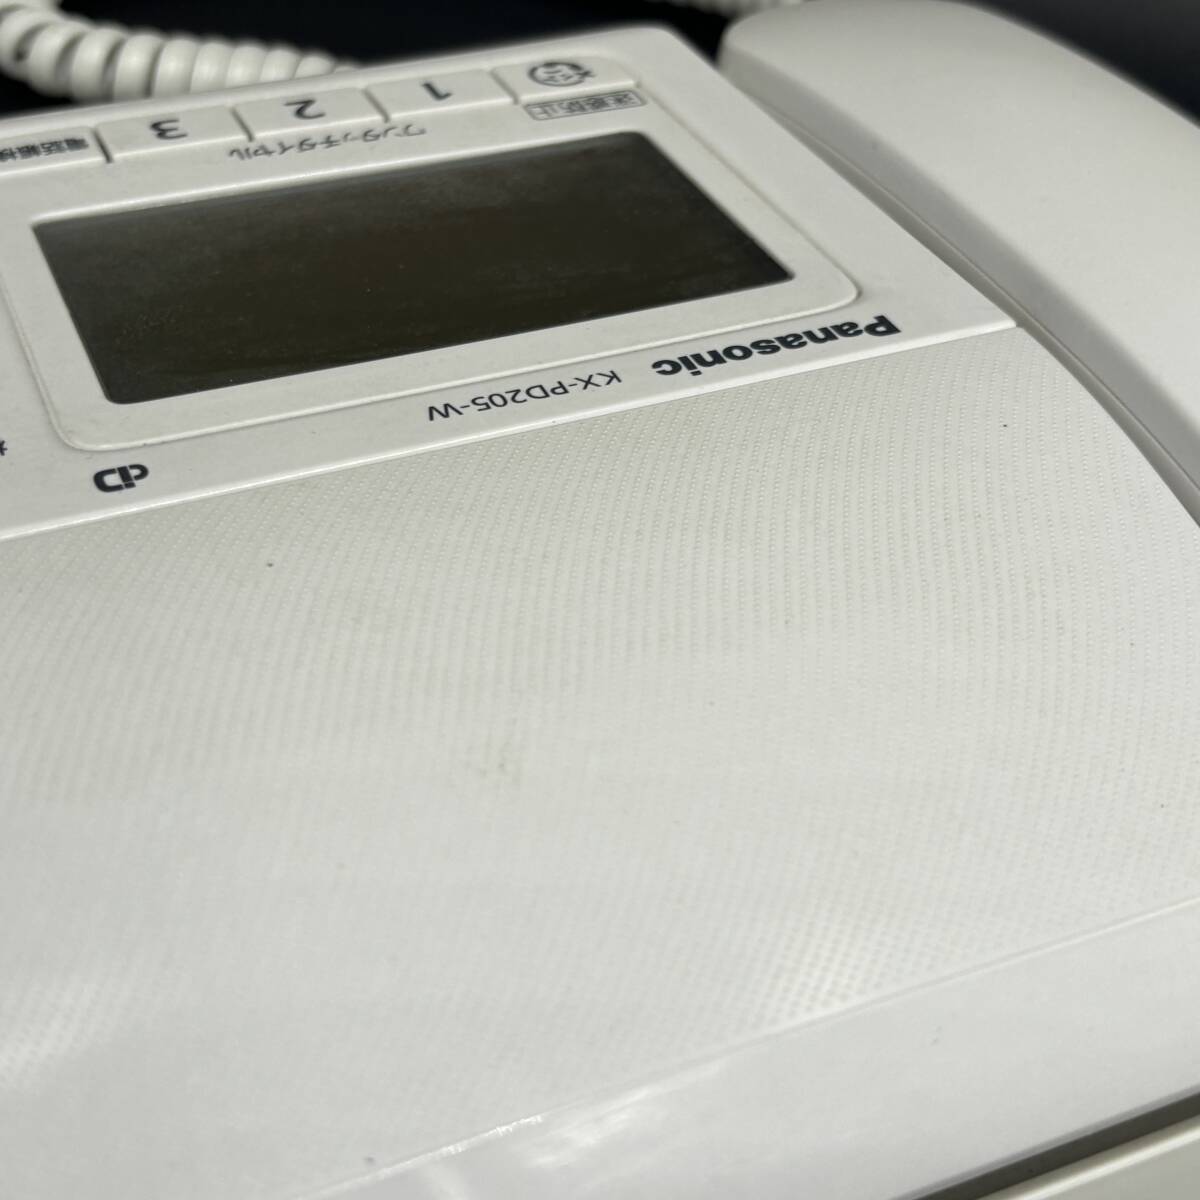 Panasonic/ Panasonic факс phone personal факс ..... родители машина только электризация подтверждено KX-PD205DL